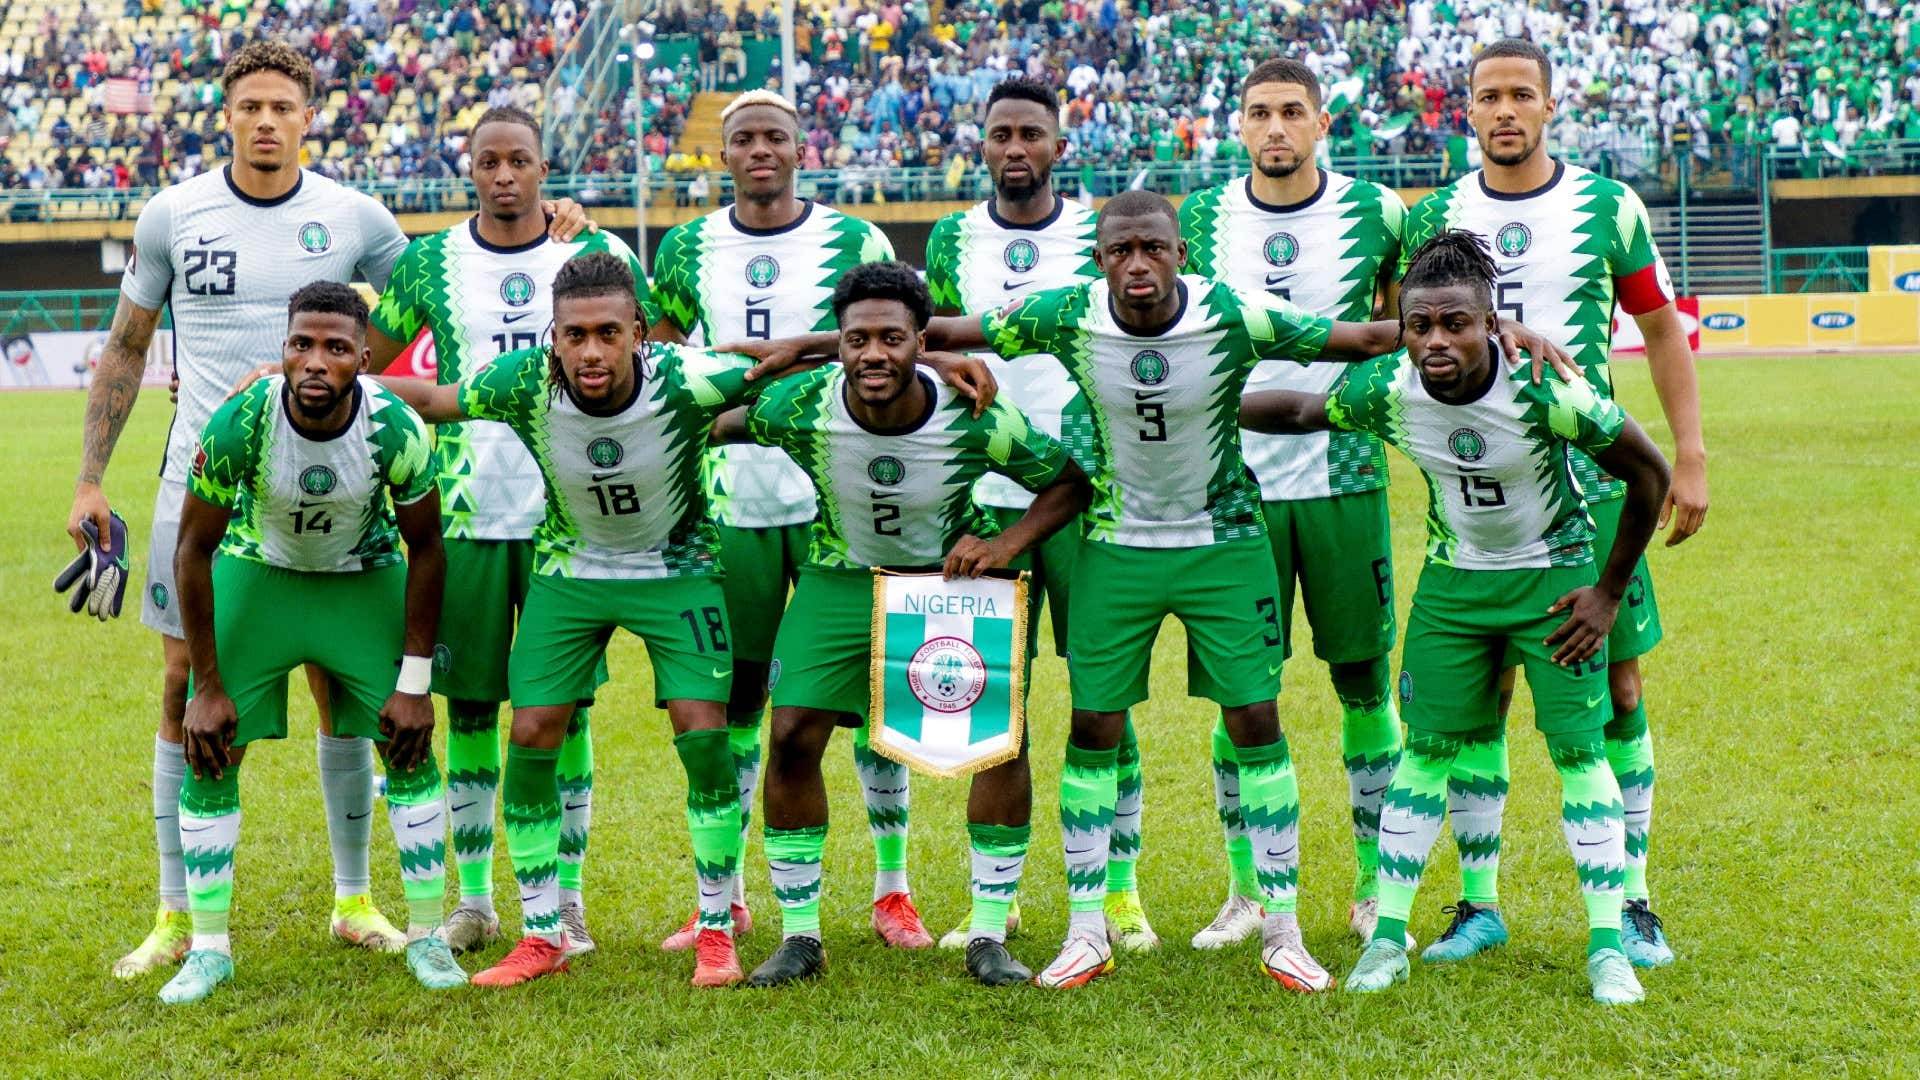 3. Nigeria (32nd overall)